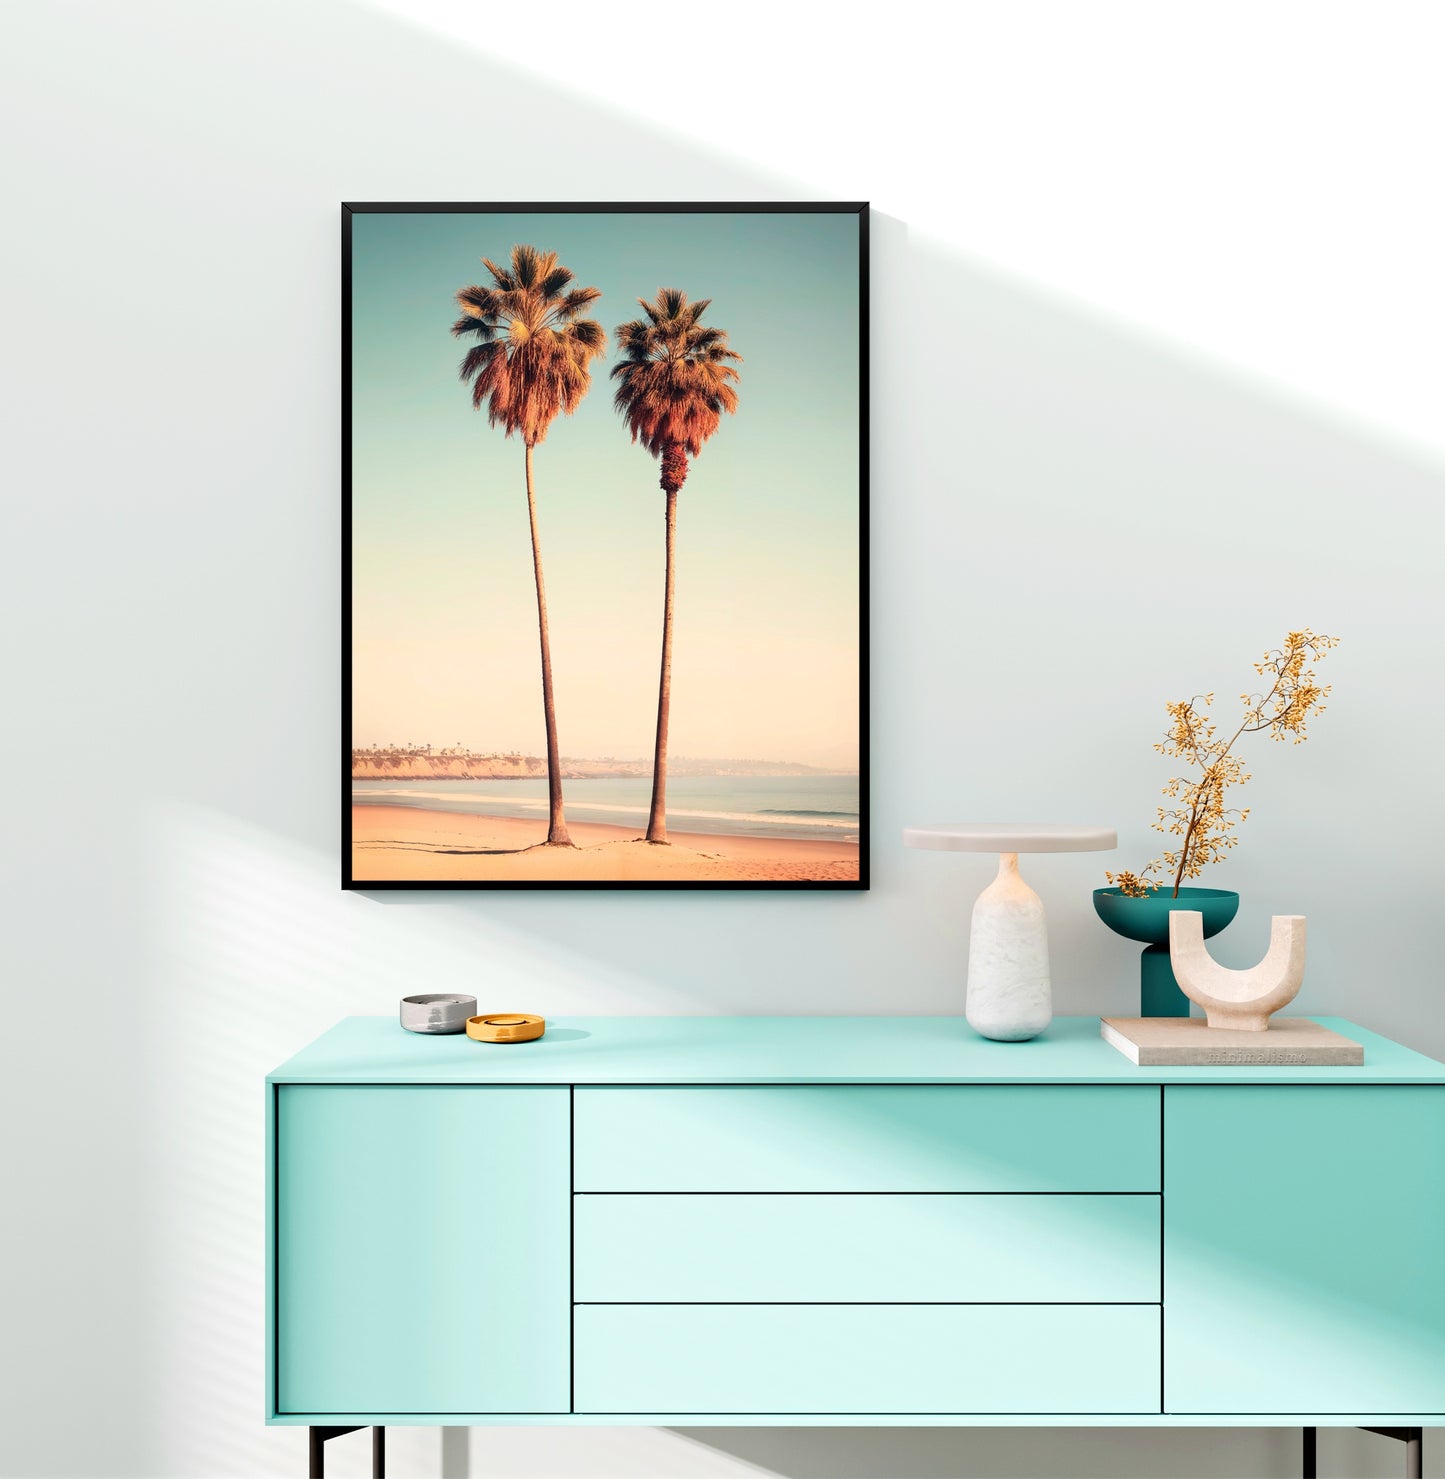 Philippe Hugonnard -  California Dreaming Sunset Beach Palms